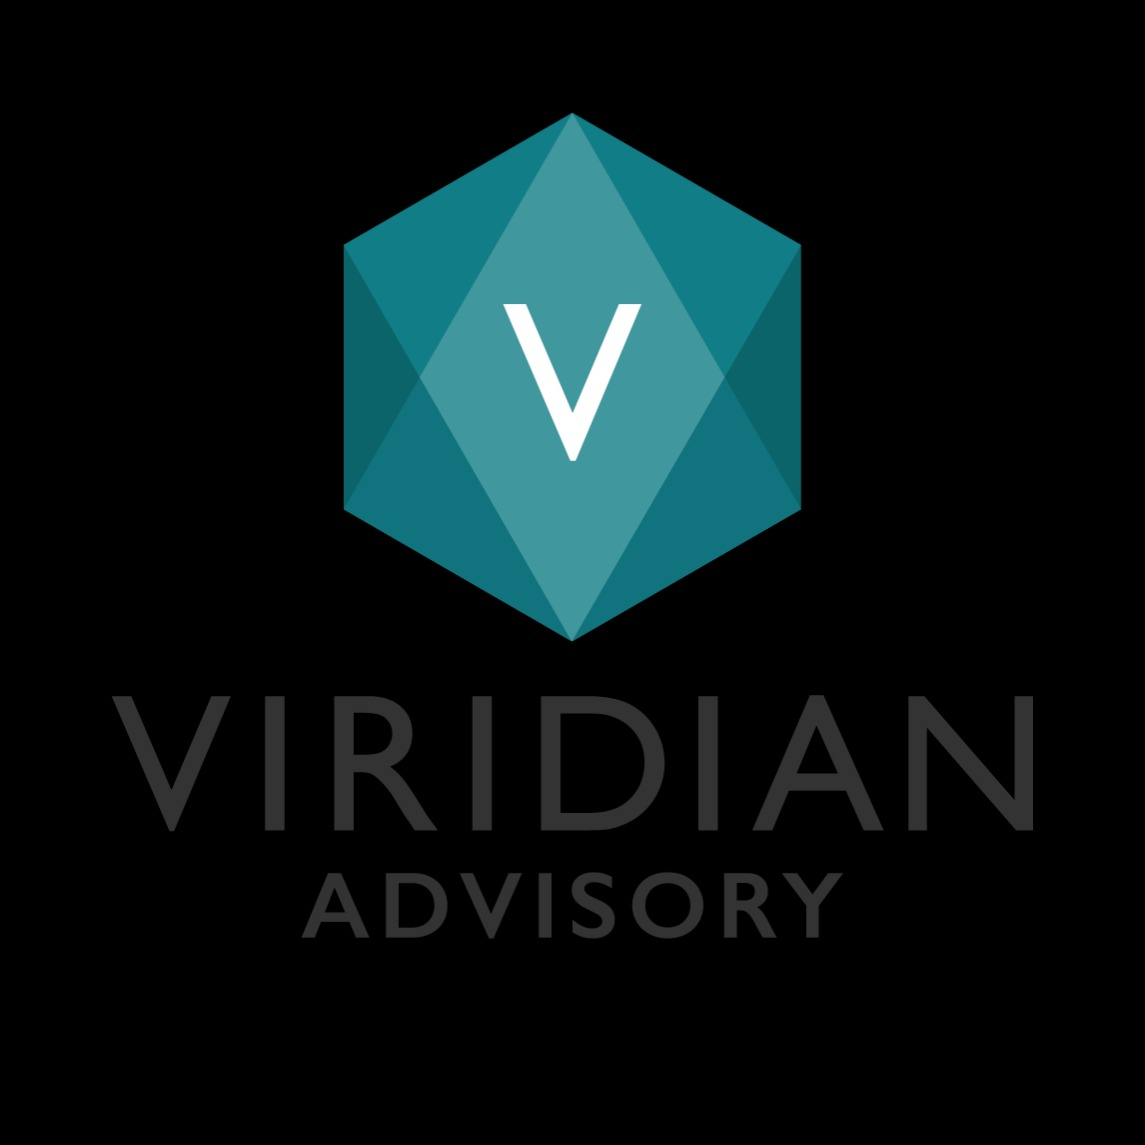 Viridian Advisory Viridian Financial Group Melbourne (13) 0084 7434